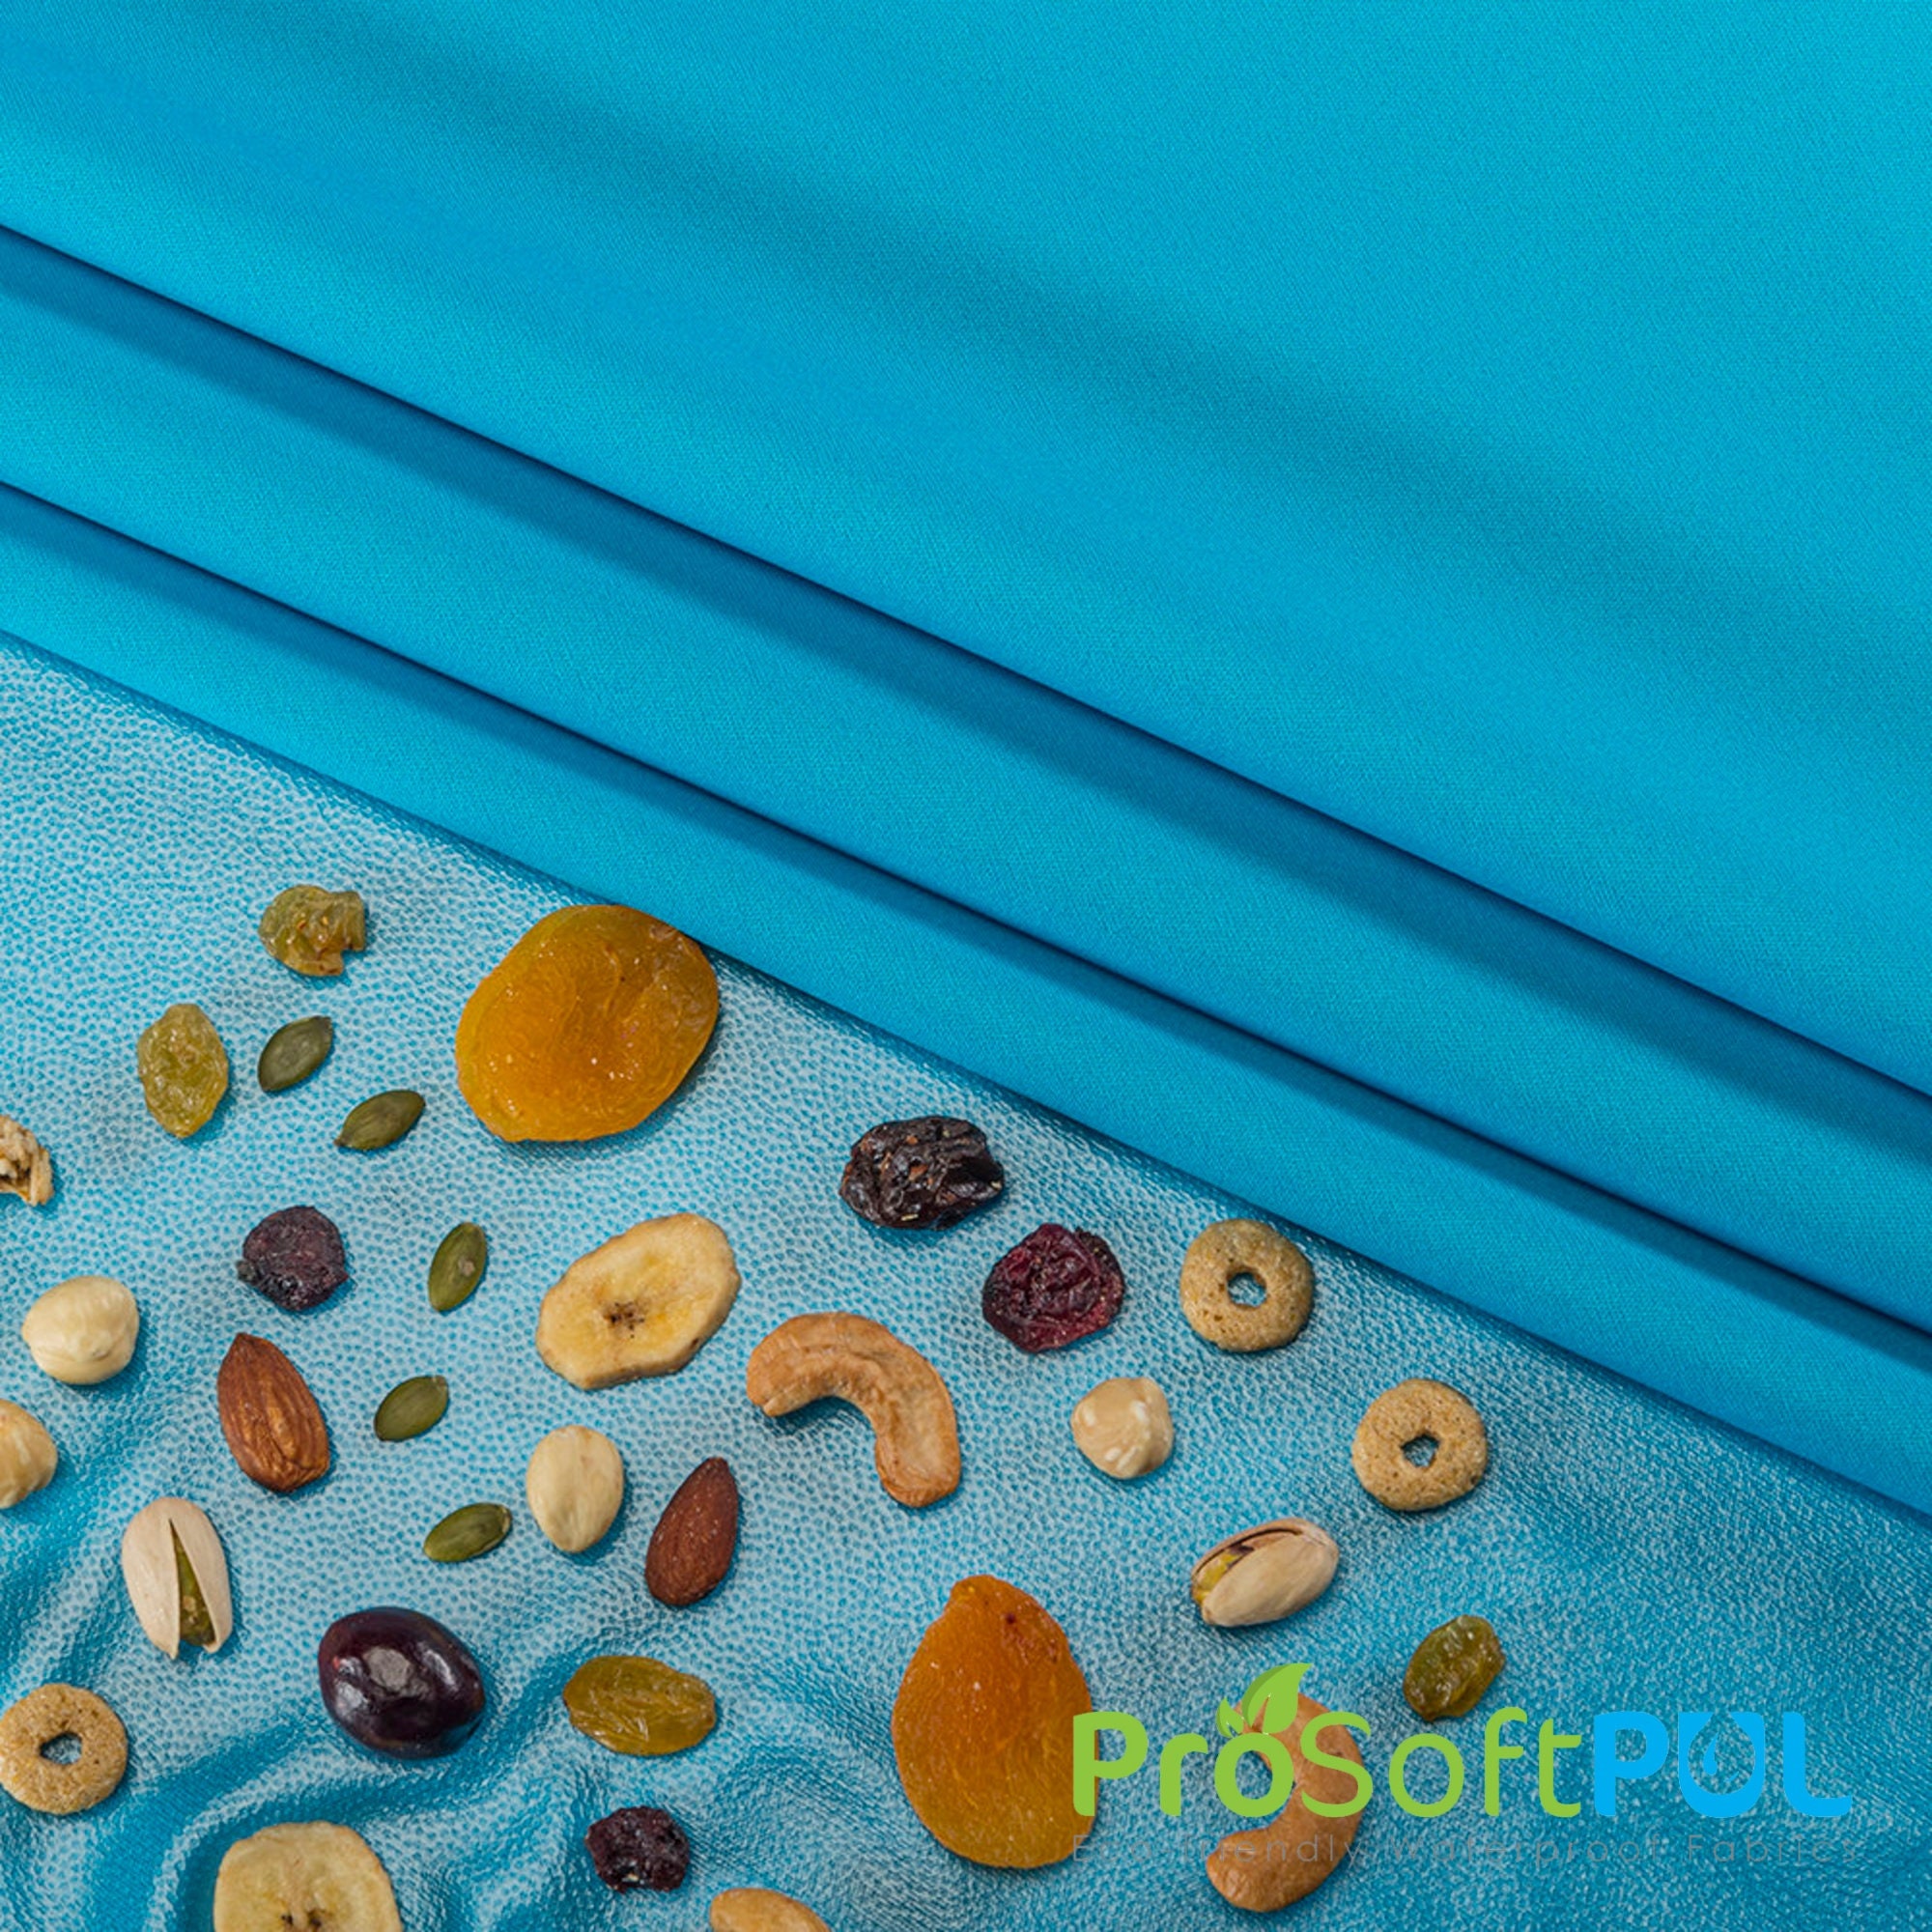 ProSoft FoodSAFE Waterproof PUL Fabric W-396 Nude. Made in USA